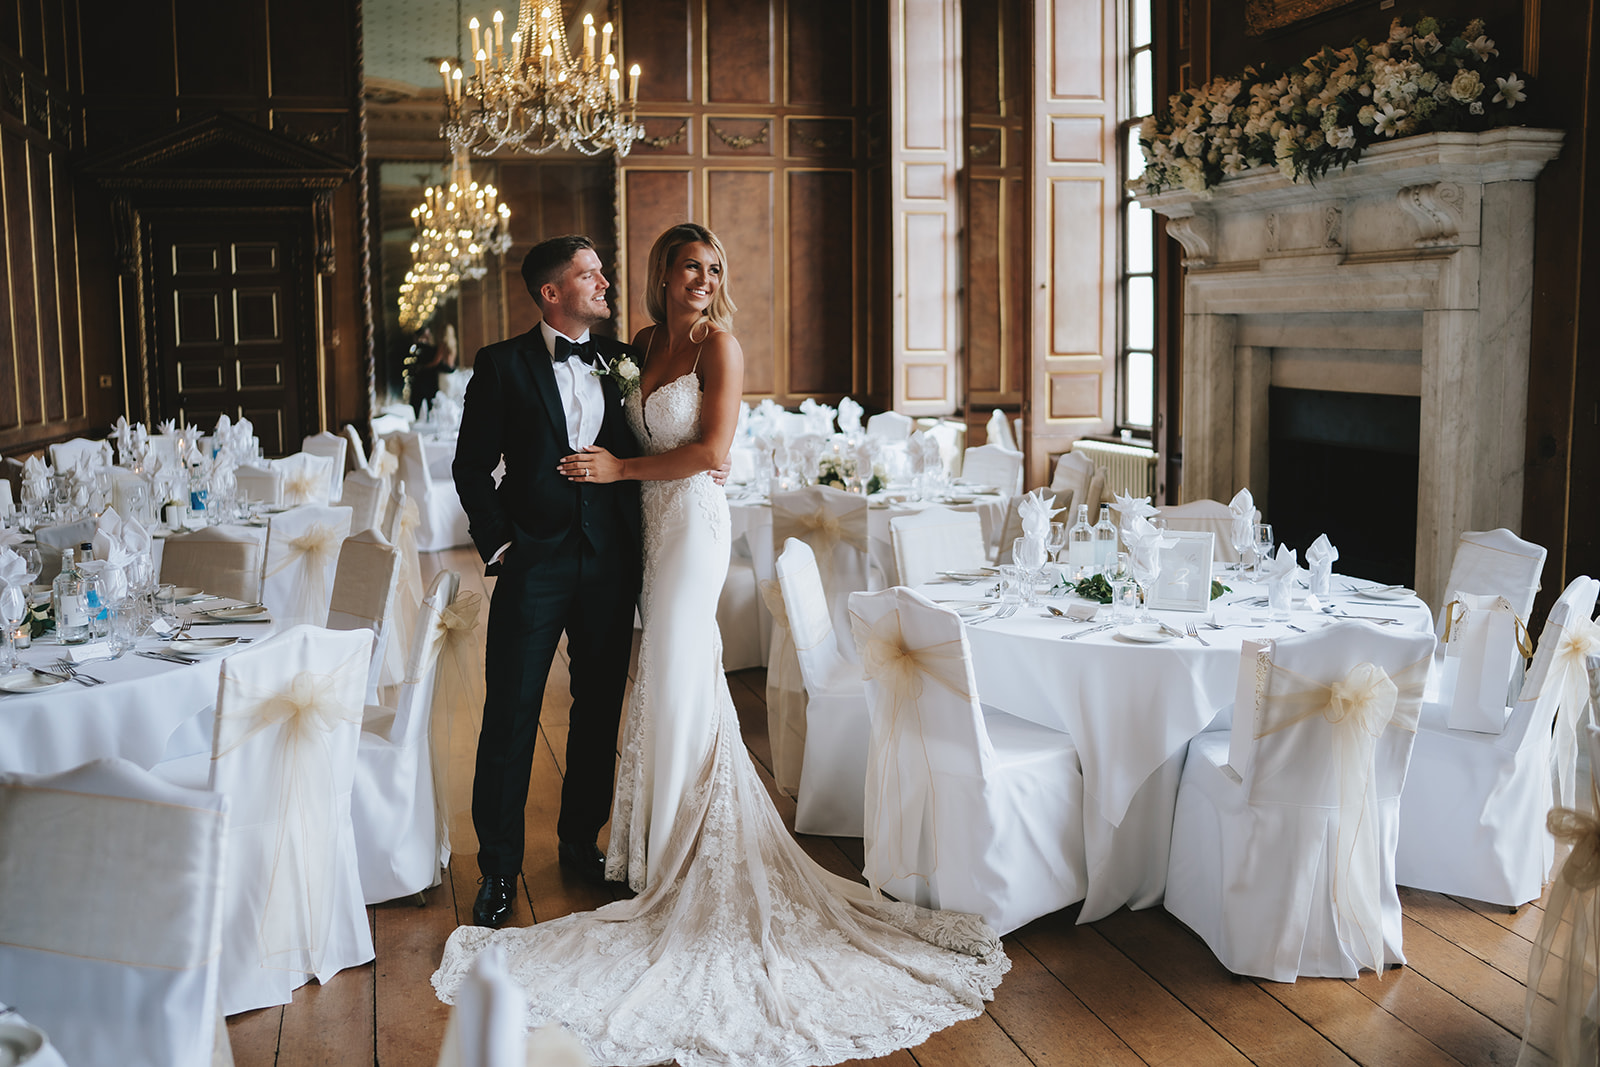 Gosfield Hall: Experiencing Timeless Elegance at Essex’s Premier Wedding Venue